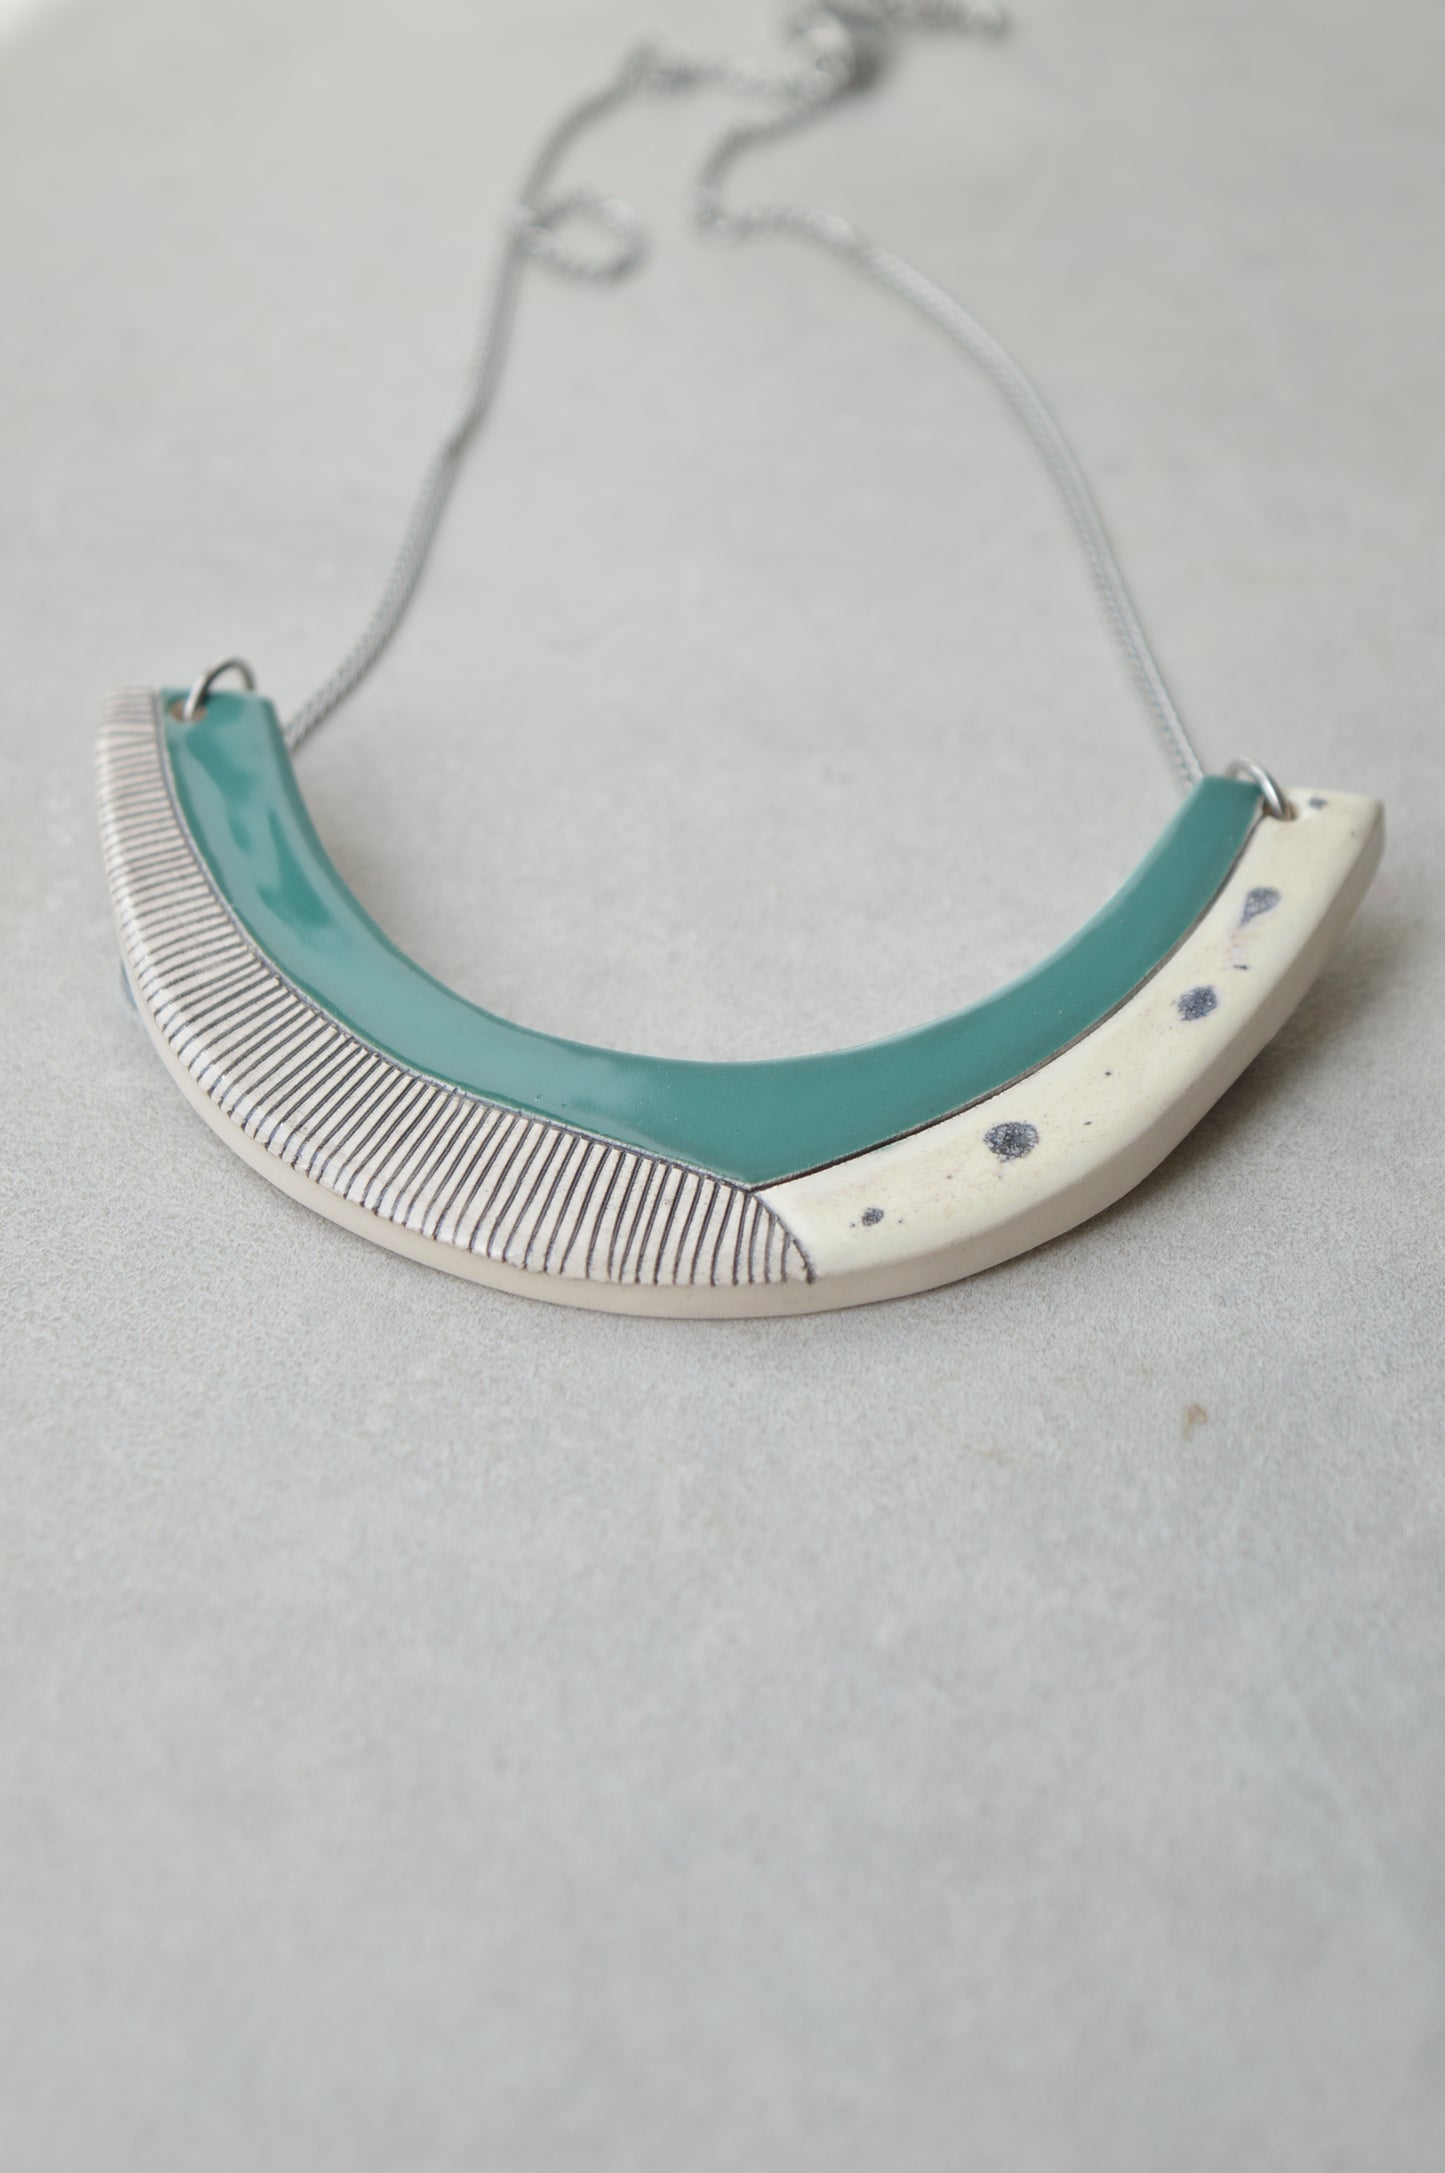 Geometric ceramic statement necklace No. 5